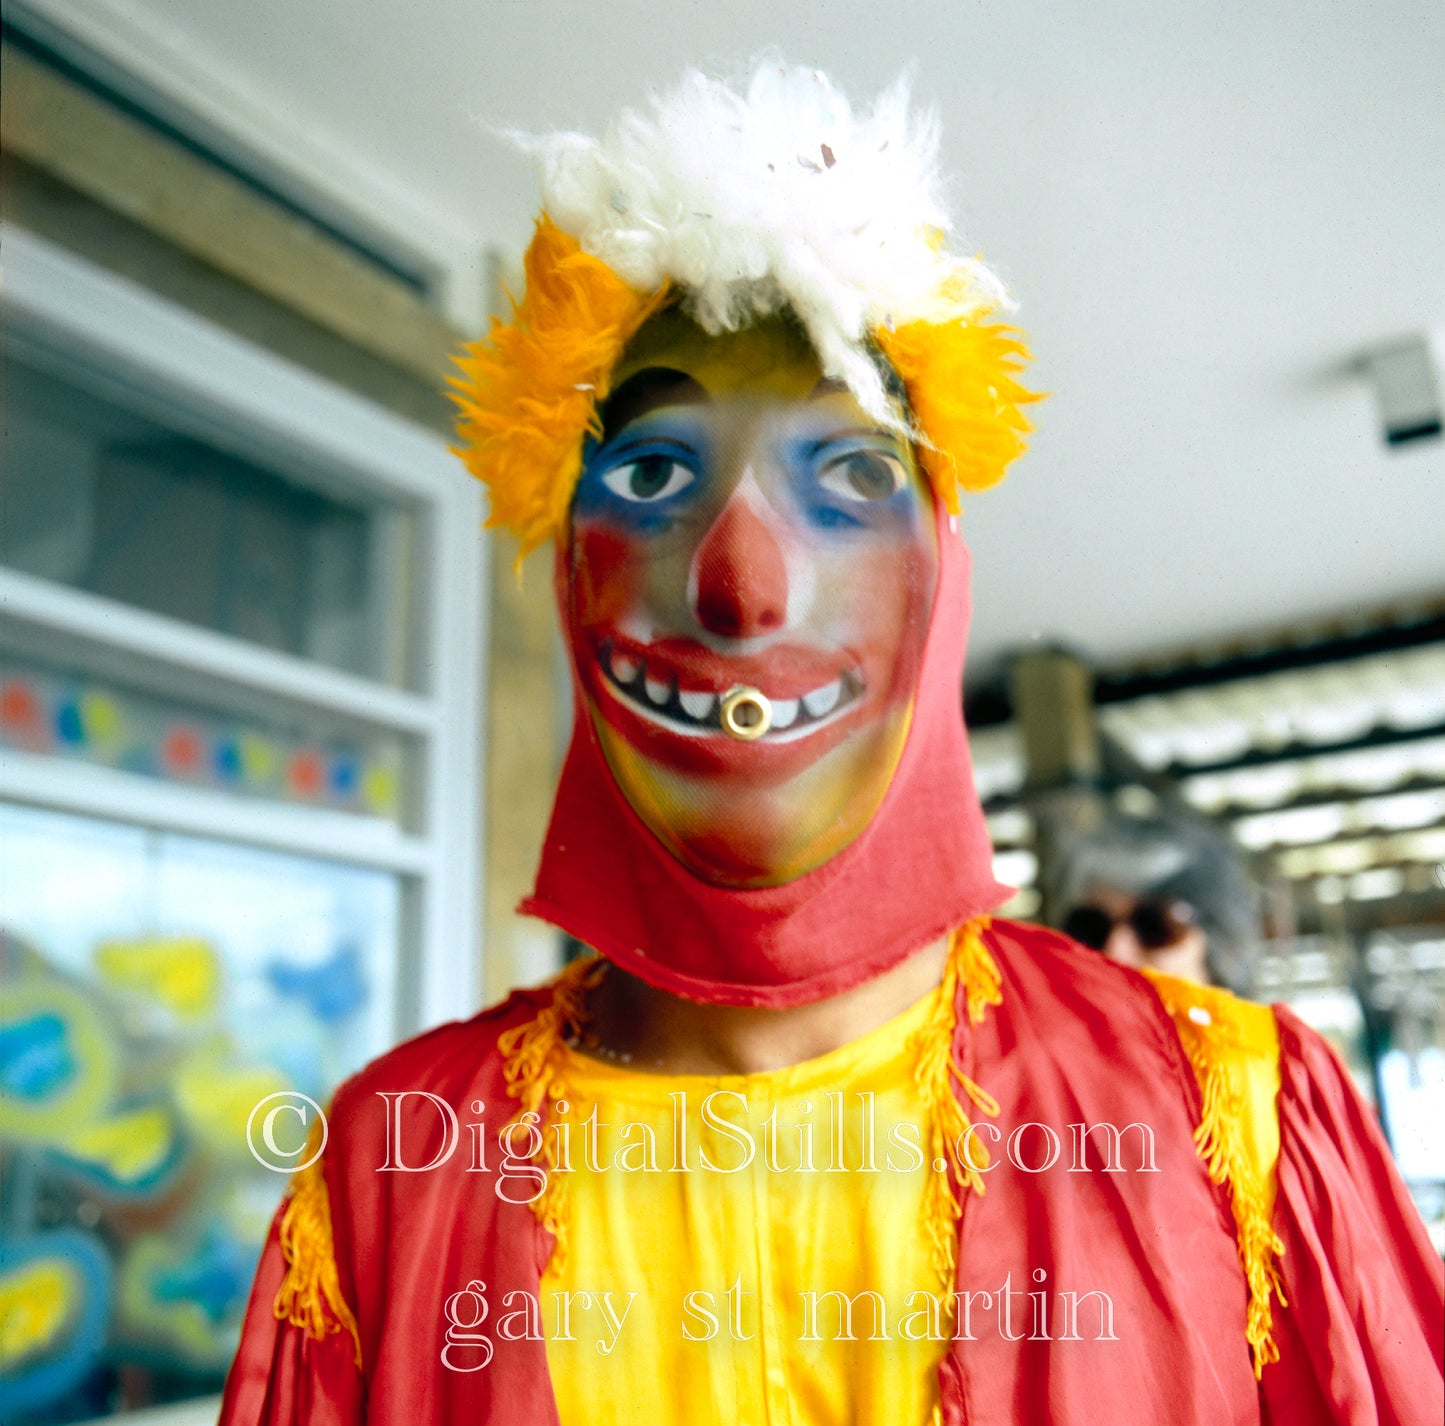 Clowning Around at Carnival